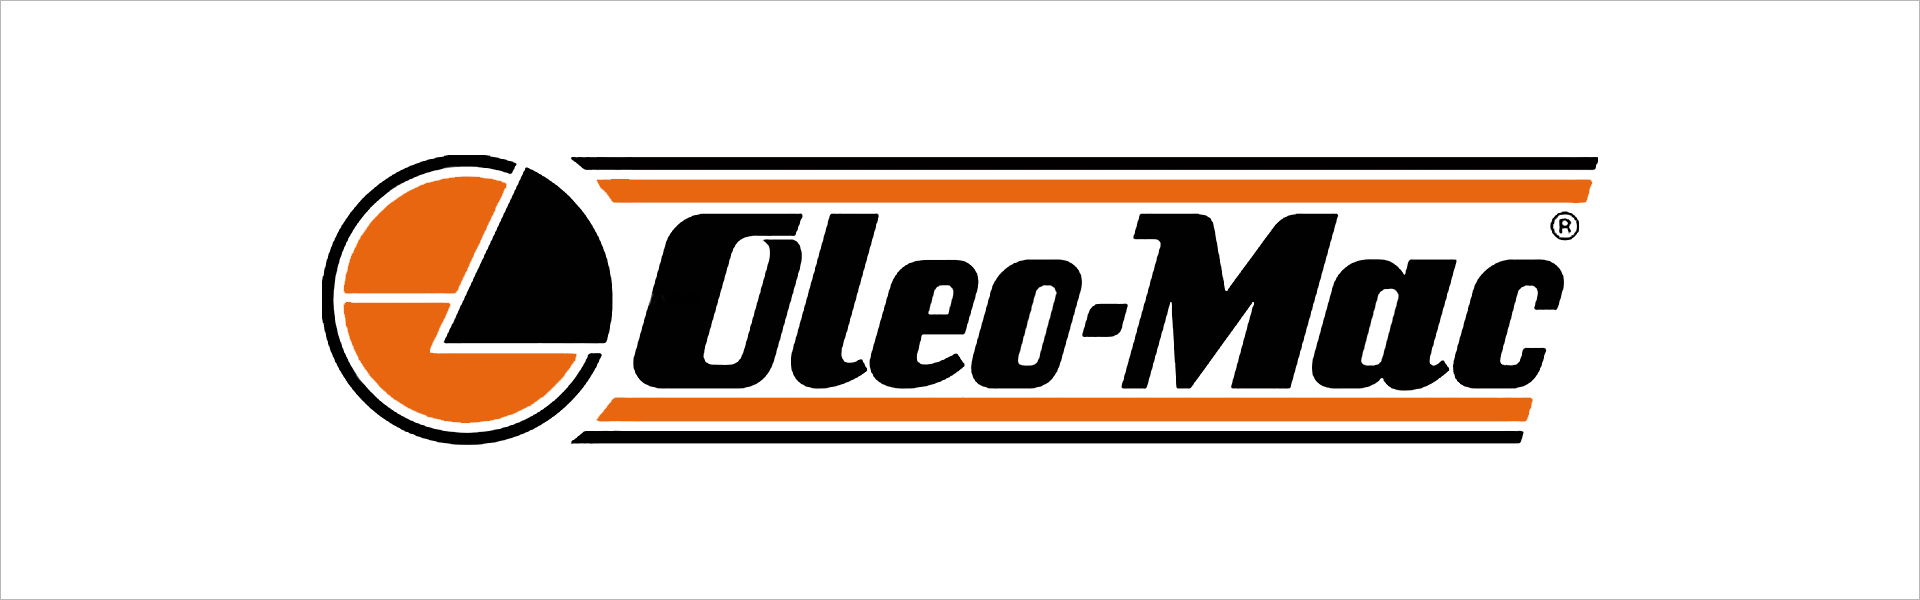 Trimmeri Oleo-Mac BCH 250 T bensiinimoottorilla Oleo-Mac